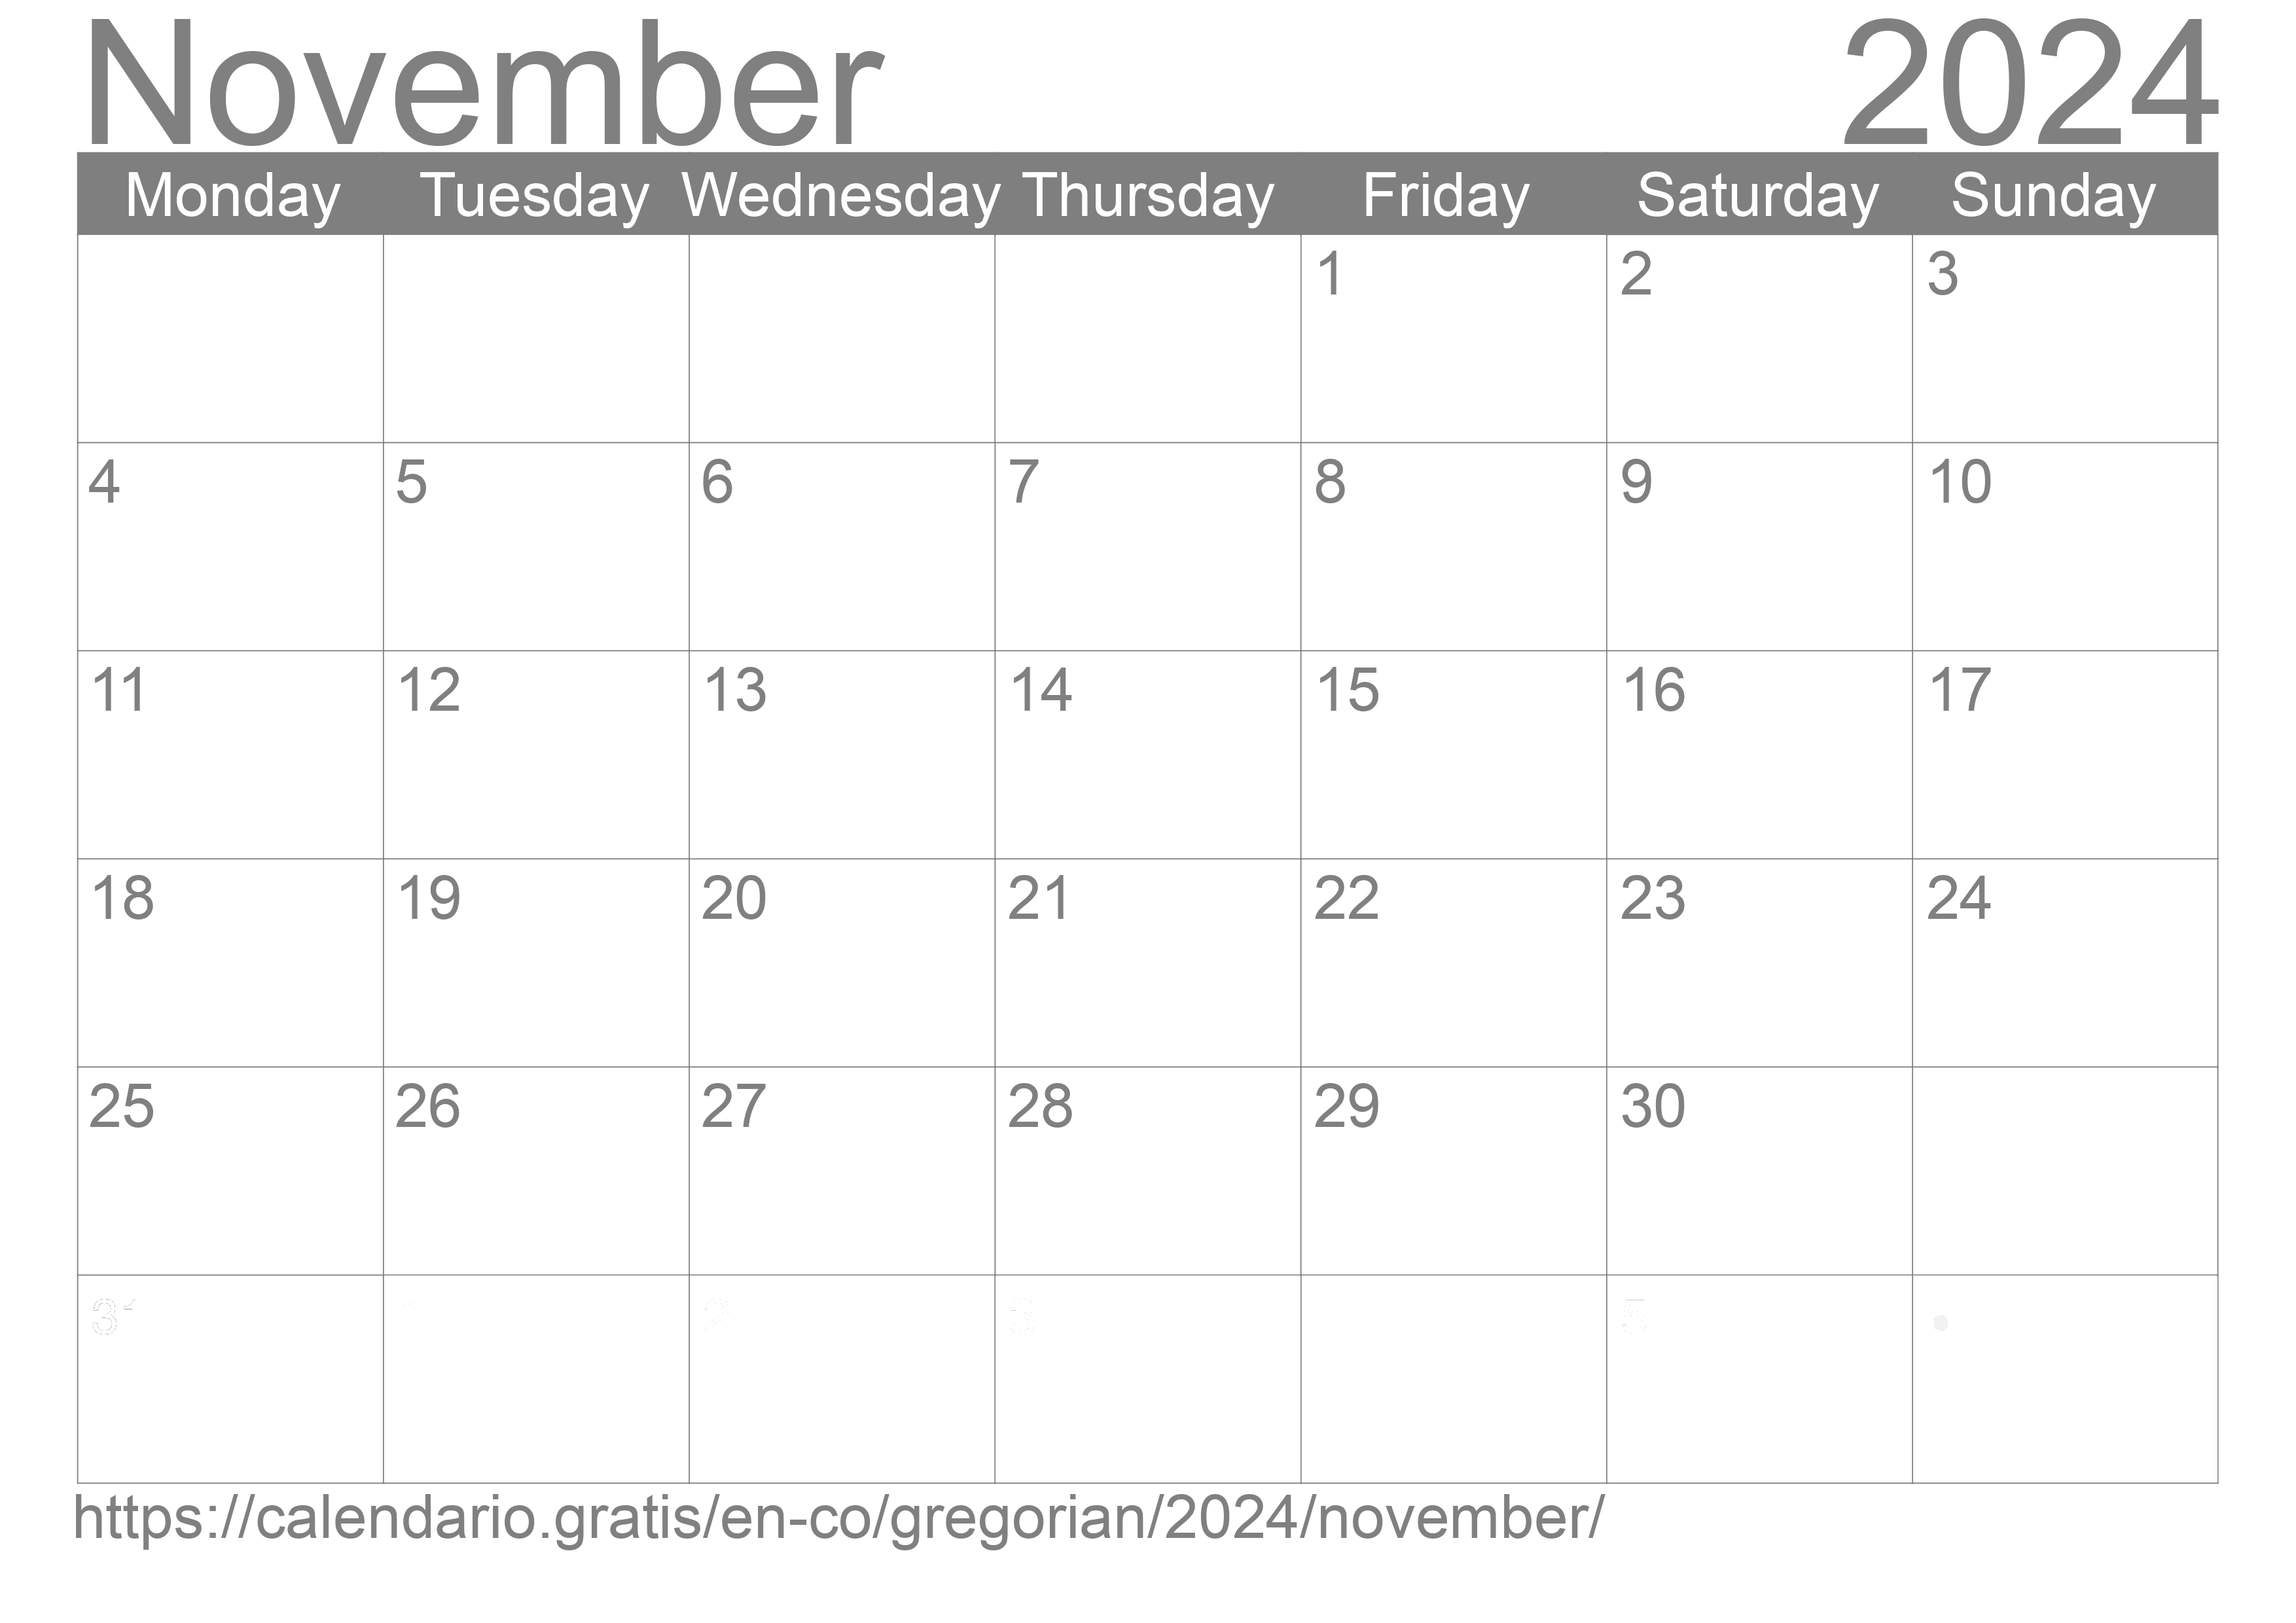 Calendar November 2024 to print